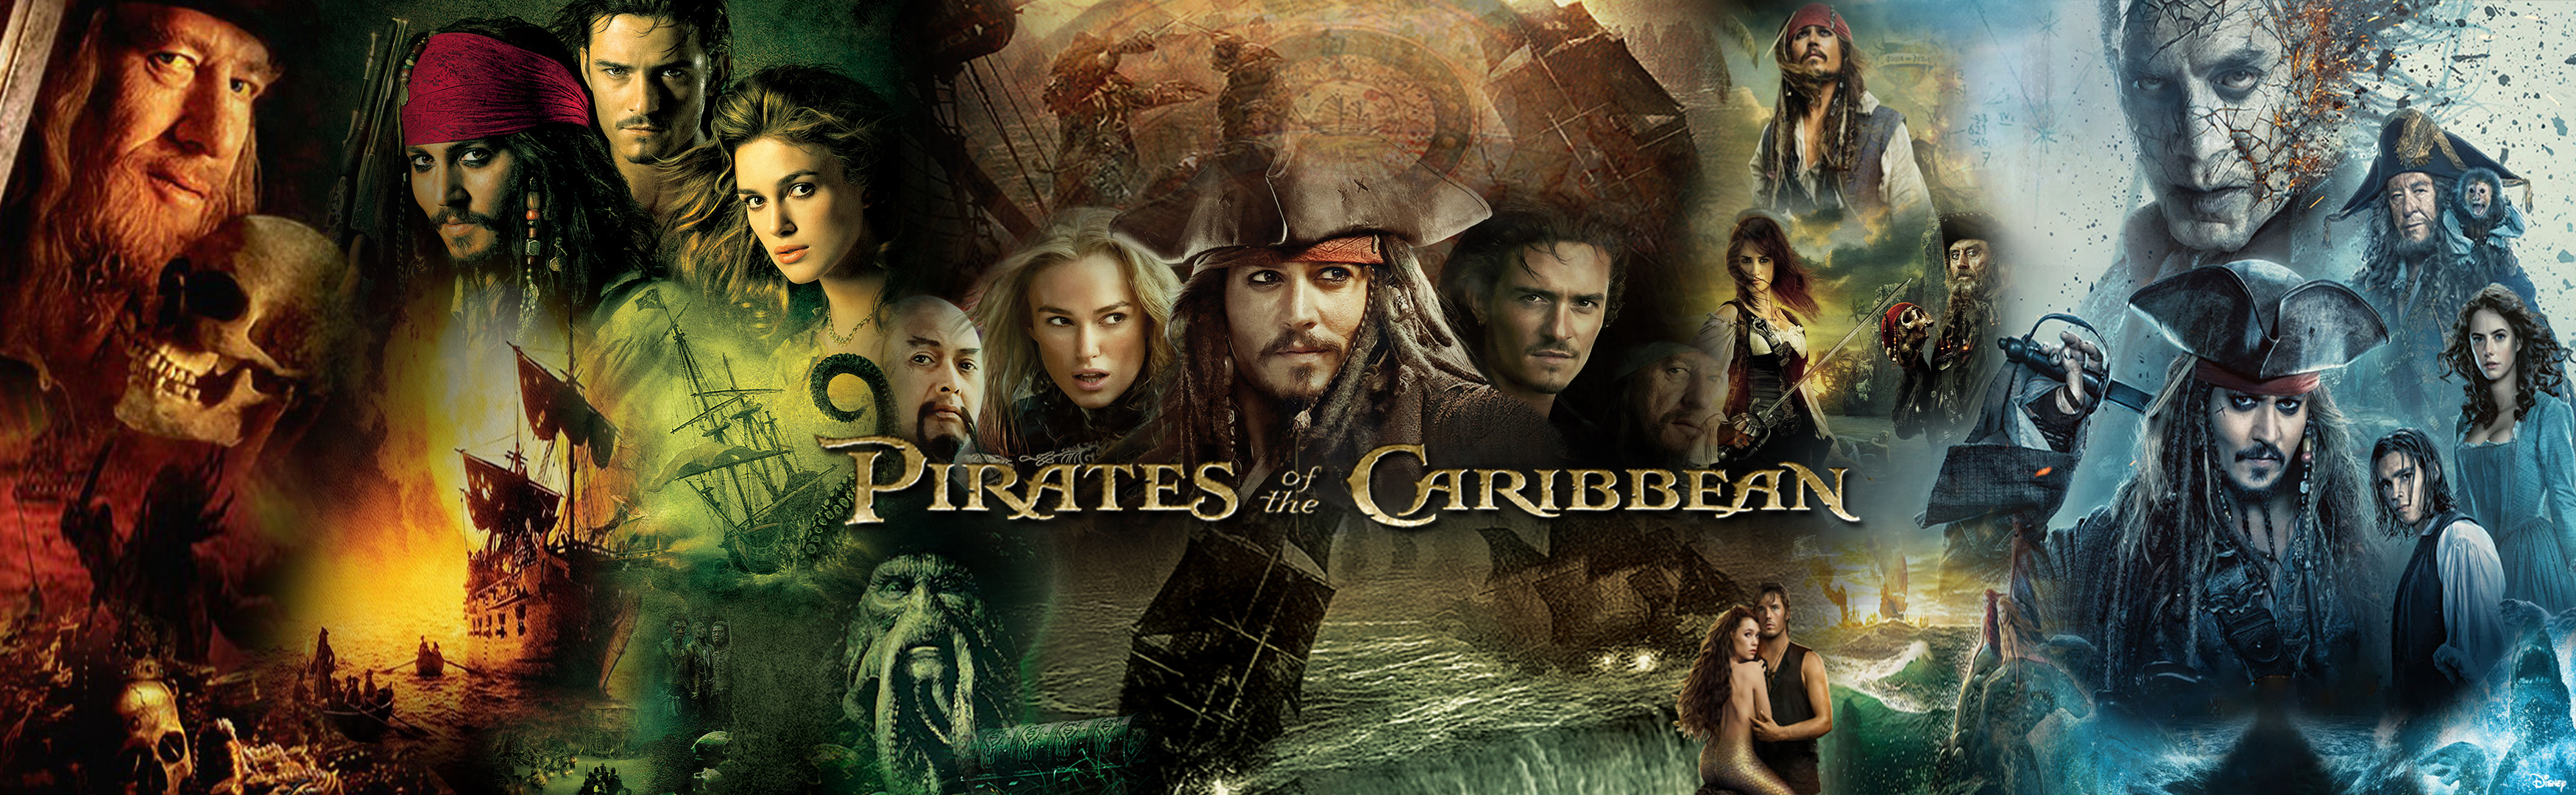 Пиратам обложки. Пираты Карибского моря 1 обложка. Пираты Карибского моря коллаж. Пираты Карибского моря баннер. Пираты Карибского моря афиша.